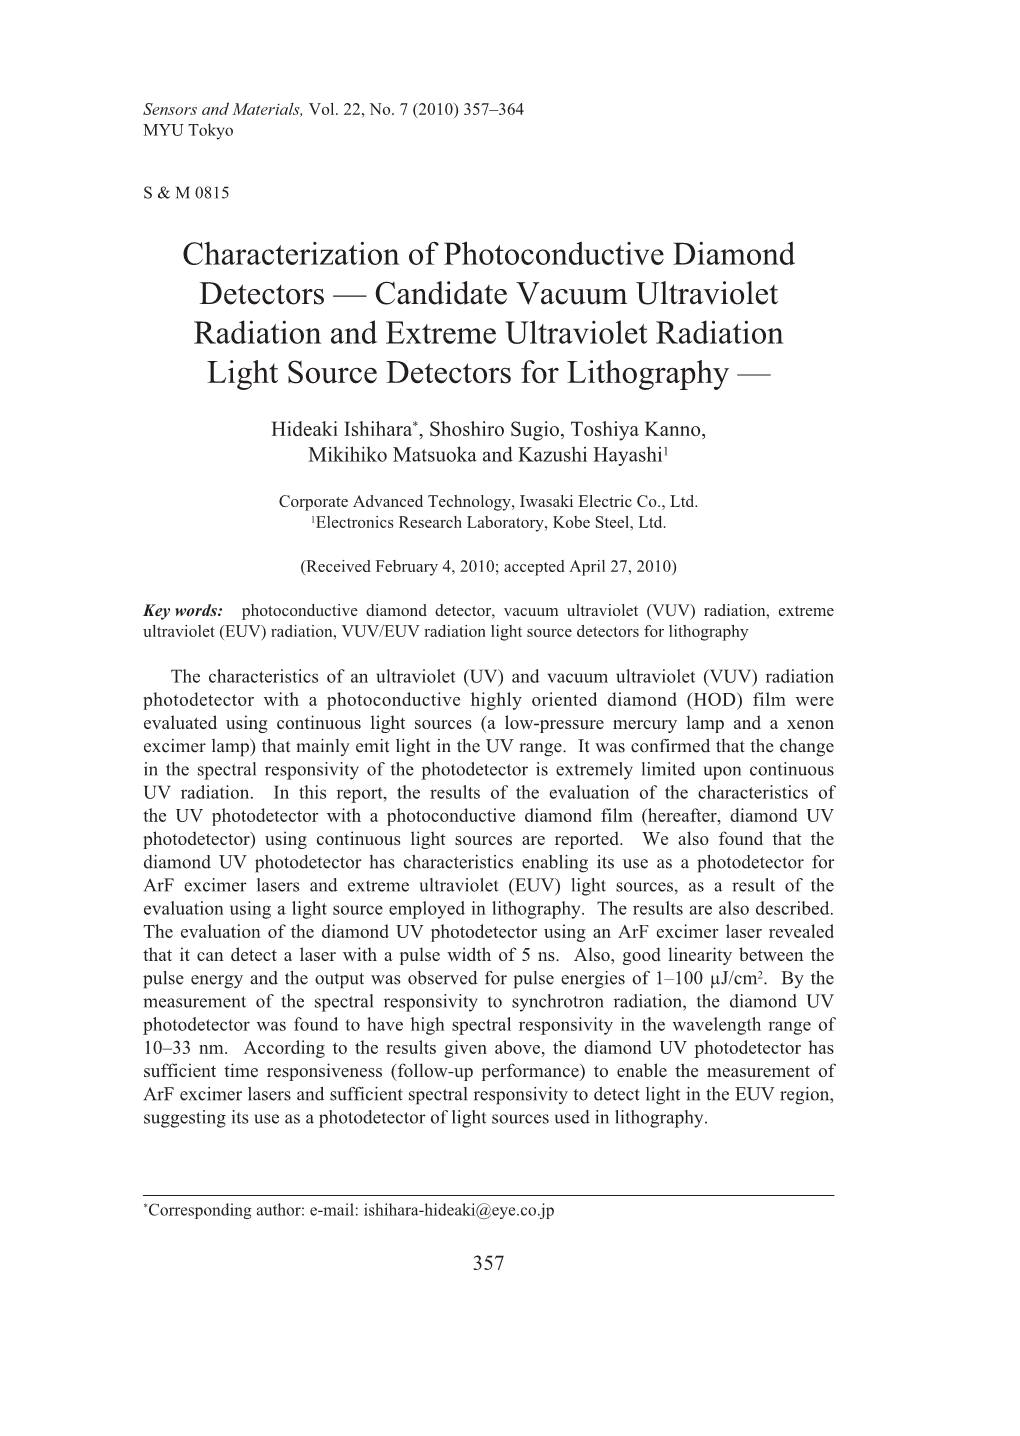 Characterization of Photoconductive Diamond Detectors—Candidate